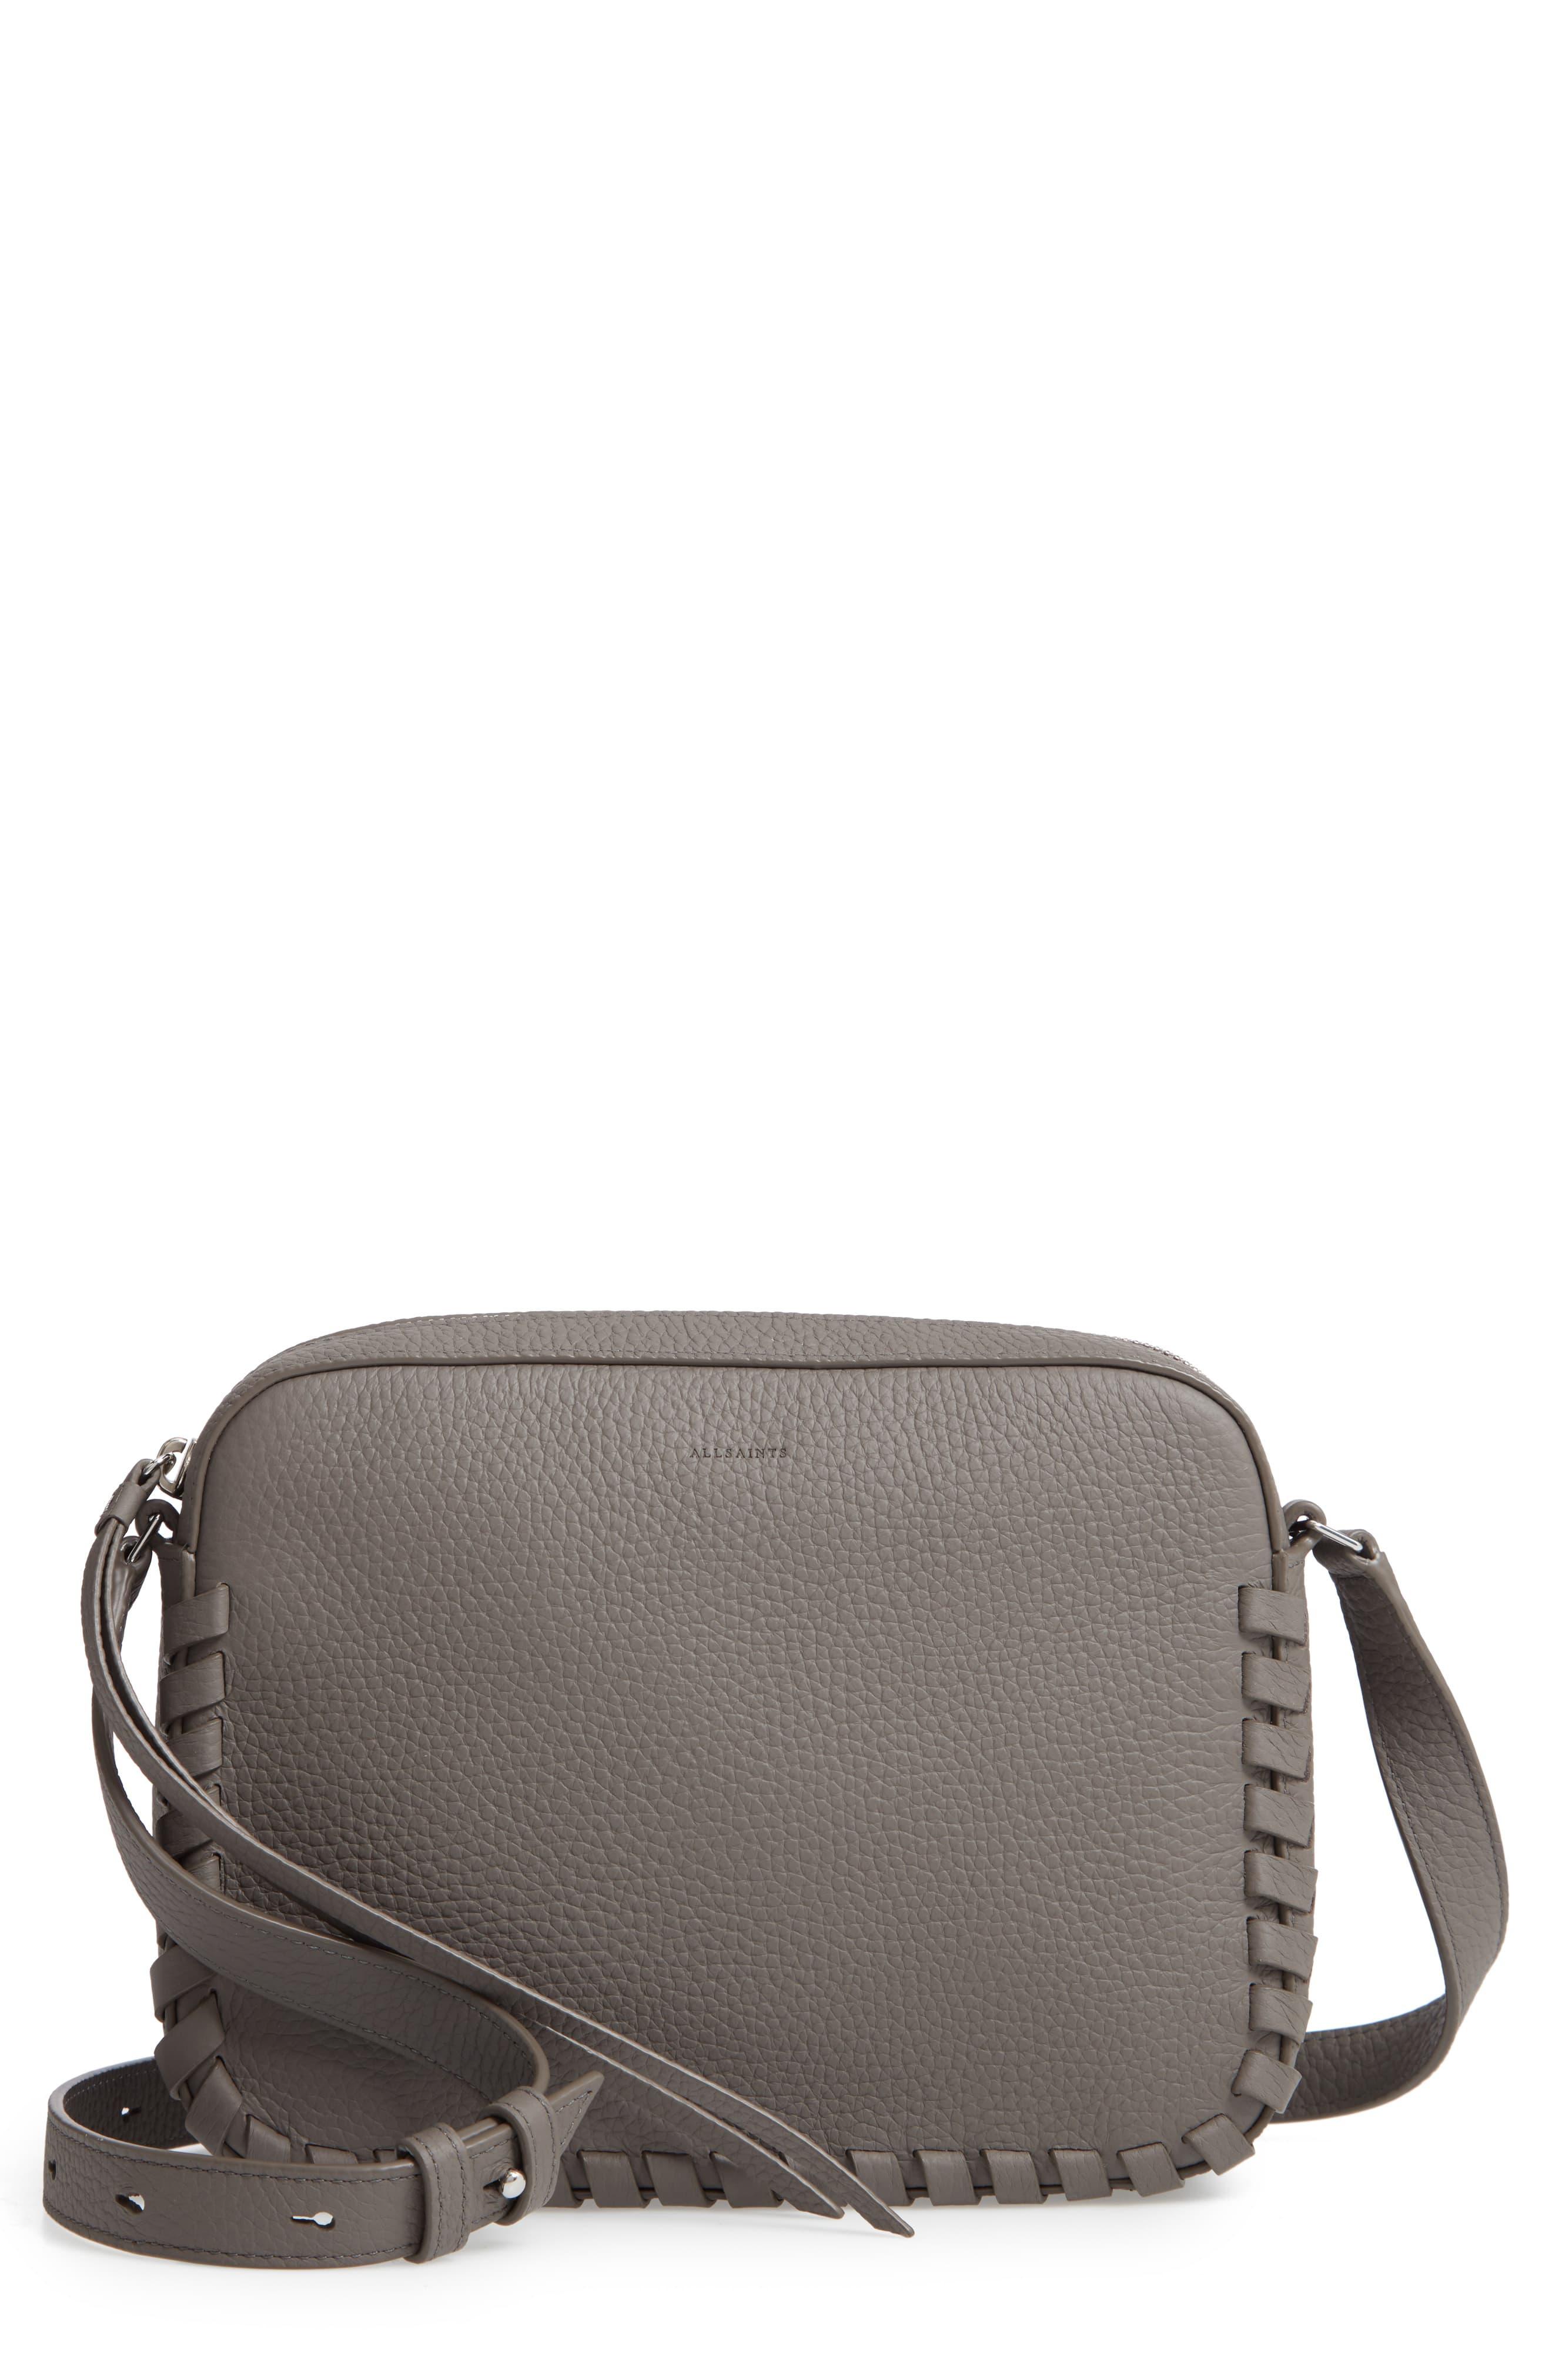 AllSaints Kepi Mini Leather Crossbody Bag in Gray - Lyst